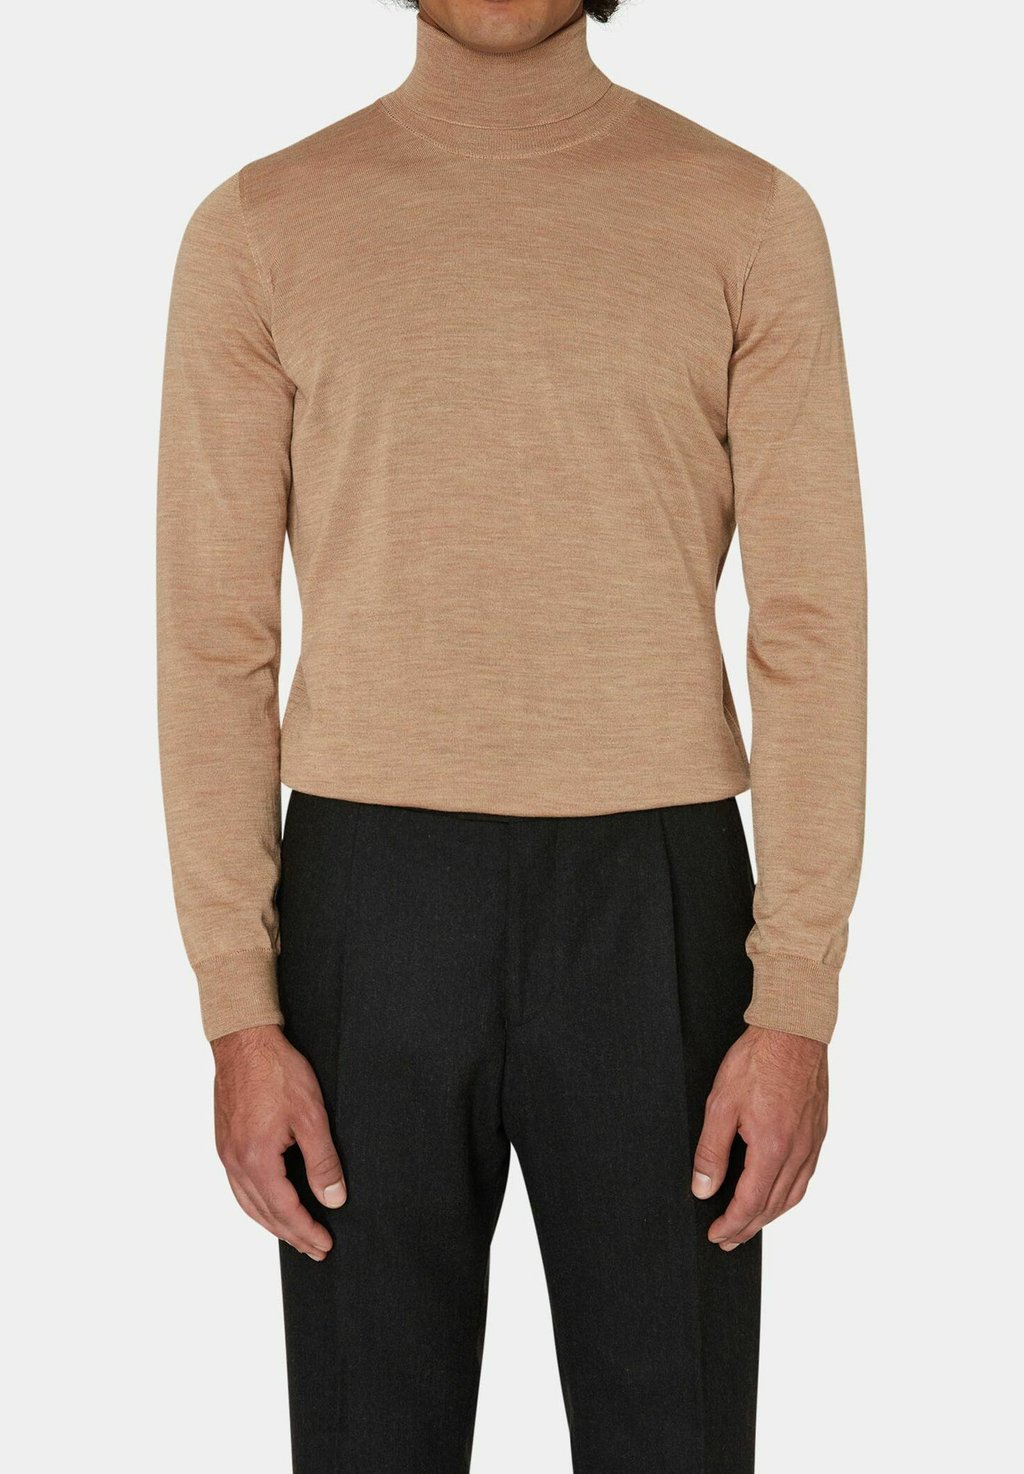 вязаный свитер patton oscar jacobson цвет dark grey Вязаный свитер COLE ROLLNECK Oscar Jacobson, цвет cenza beige